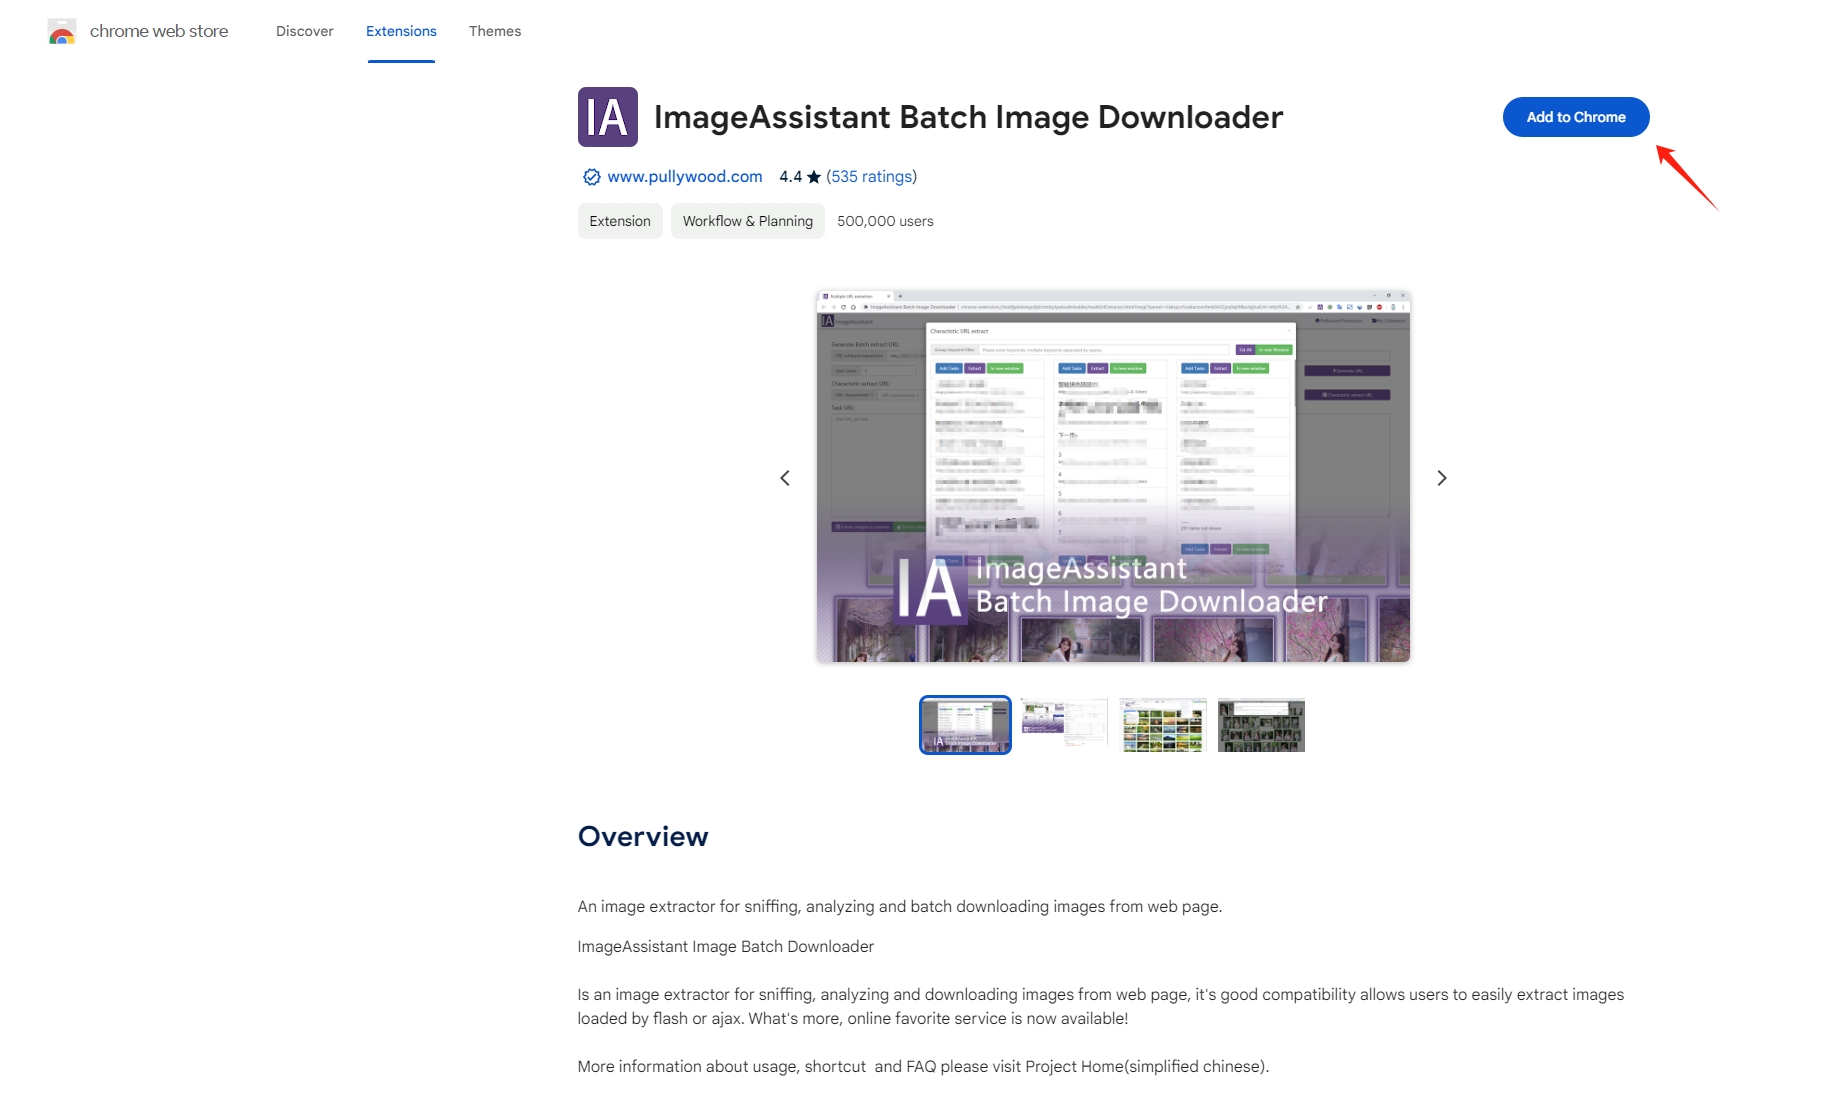 install ImageAssistant batch image downloader extension